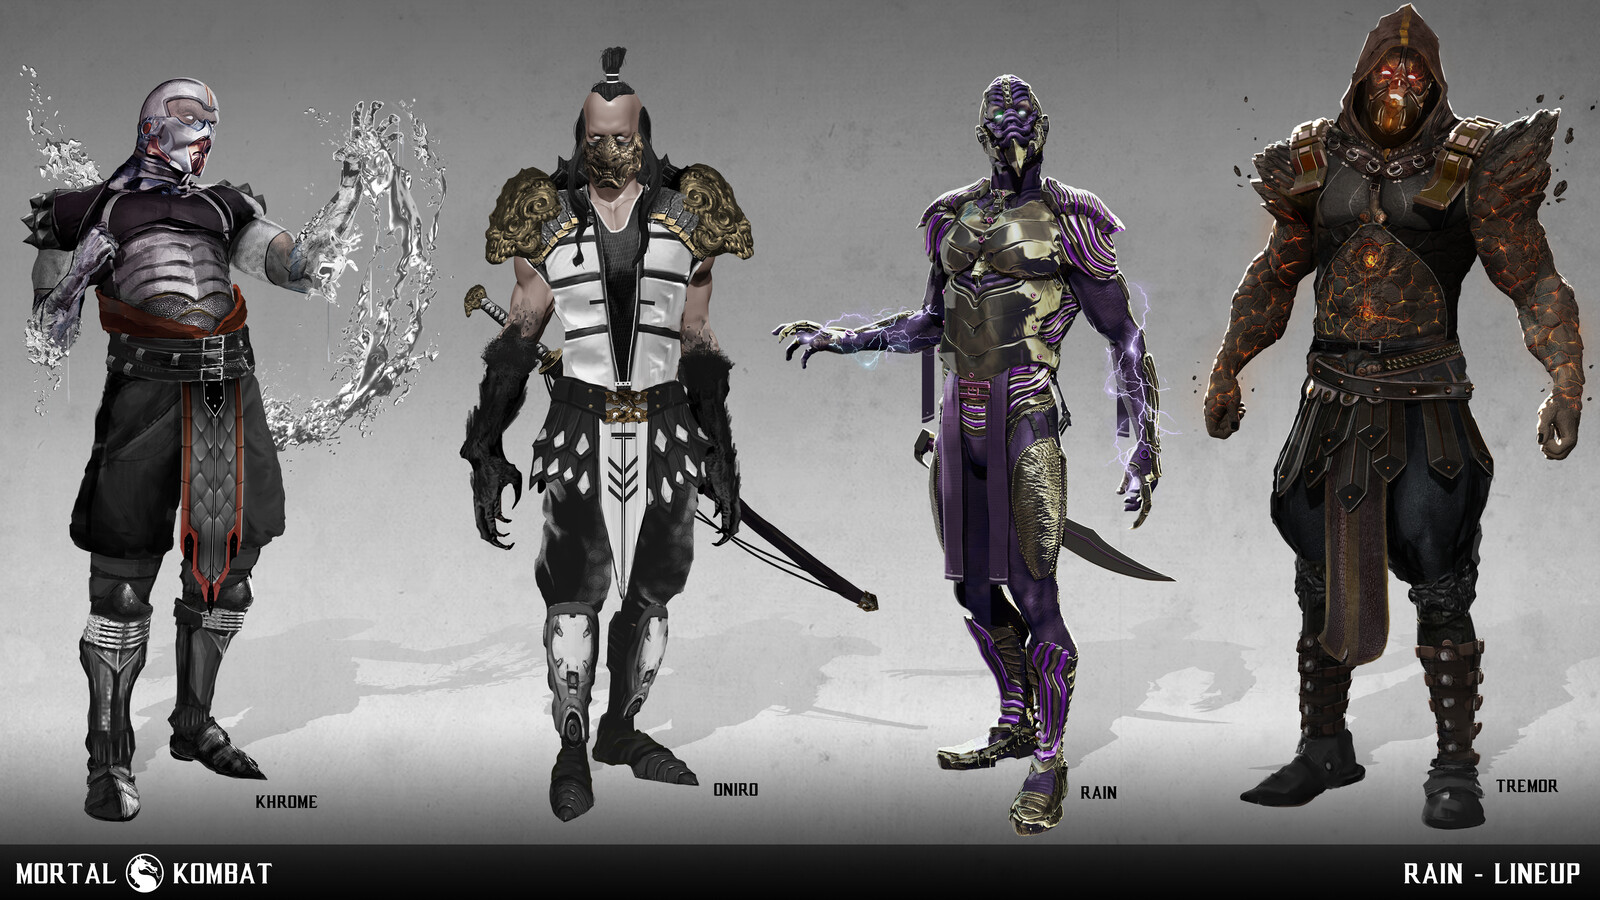 Riccardo Pasquali - Mortal Kombat 11 character re-design: RAIN